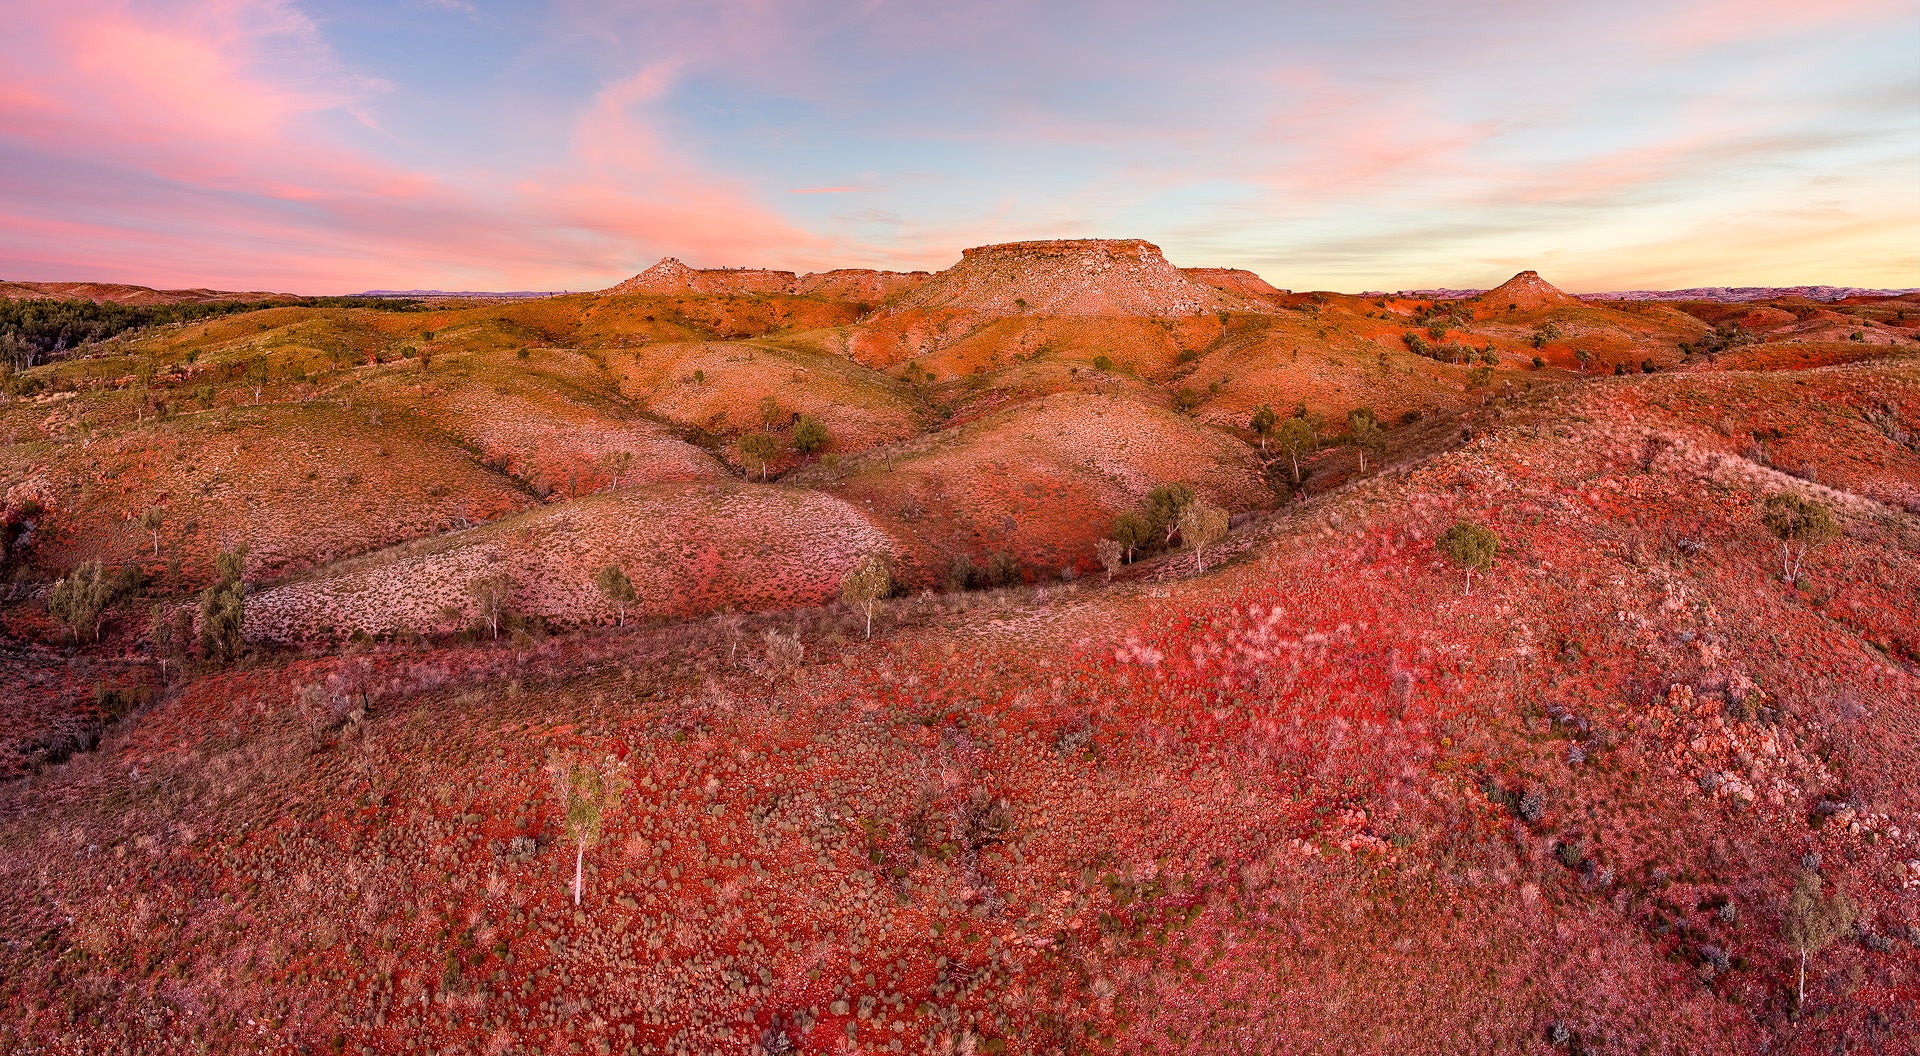 Landscape photograph taken near running waters in the pilbara region of western australia